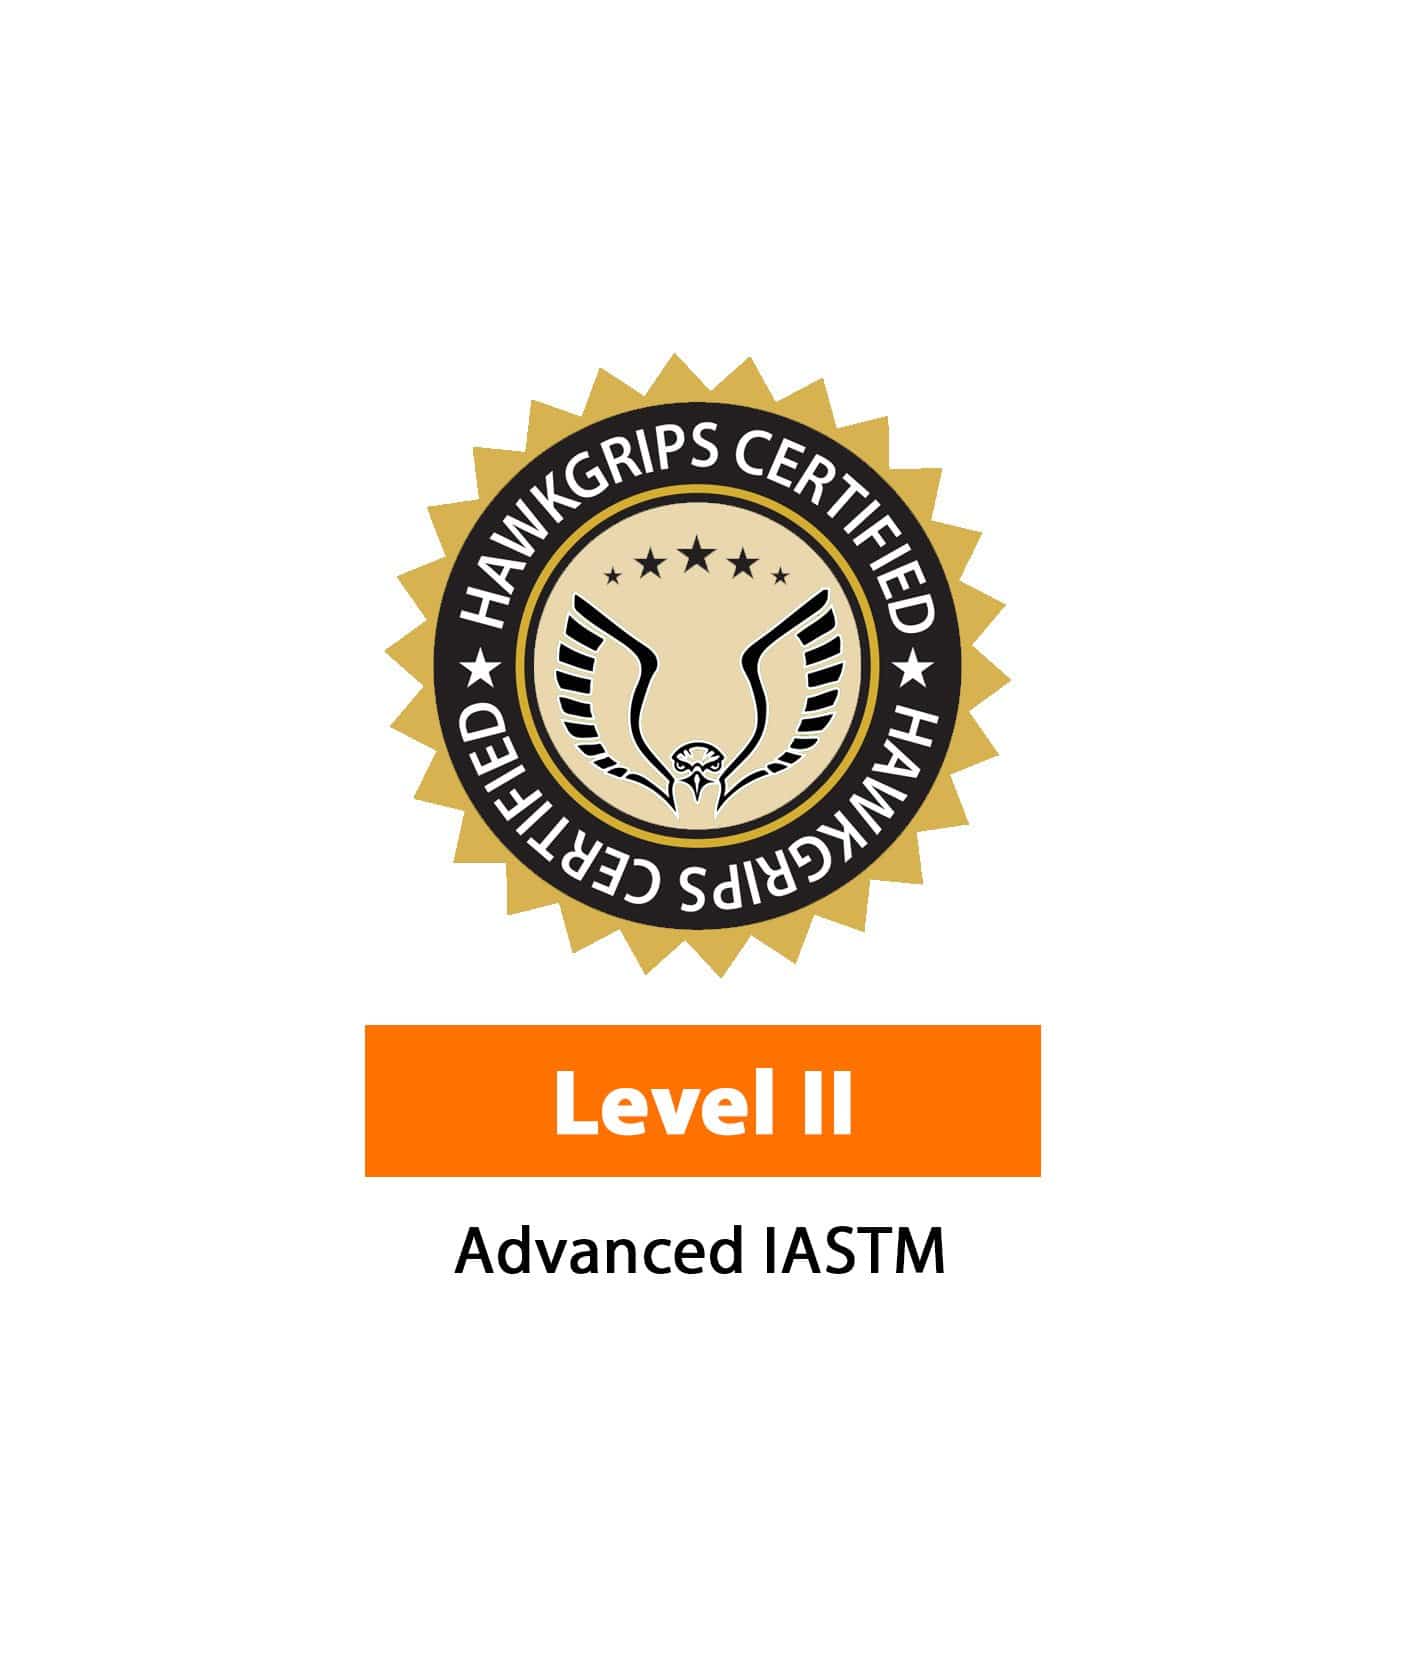 HawkGrips Course - Level II Certification Exam